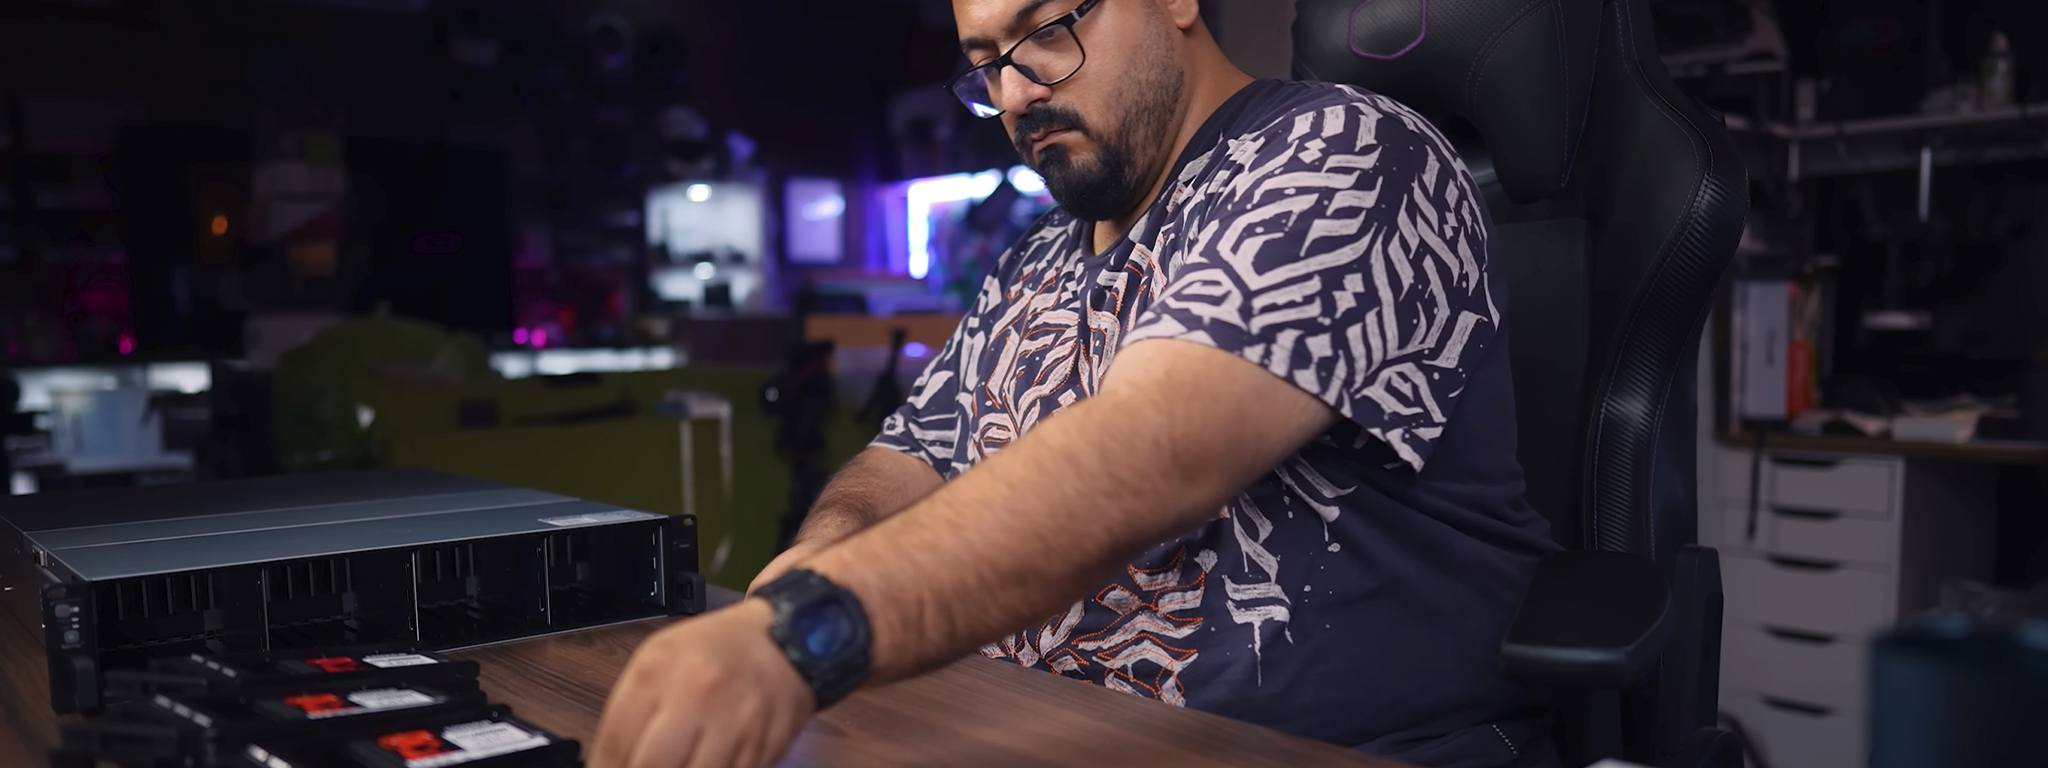 Salah Hamed – Android Basha 的影响者 – 正在其桌上的服务器机架中安装 DC600M 固态硬盘